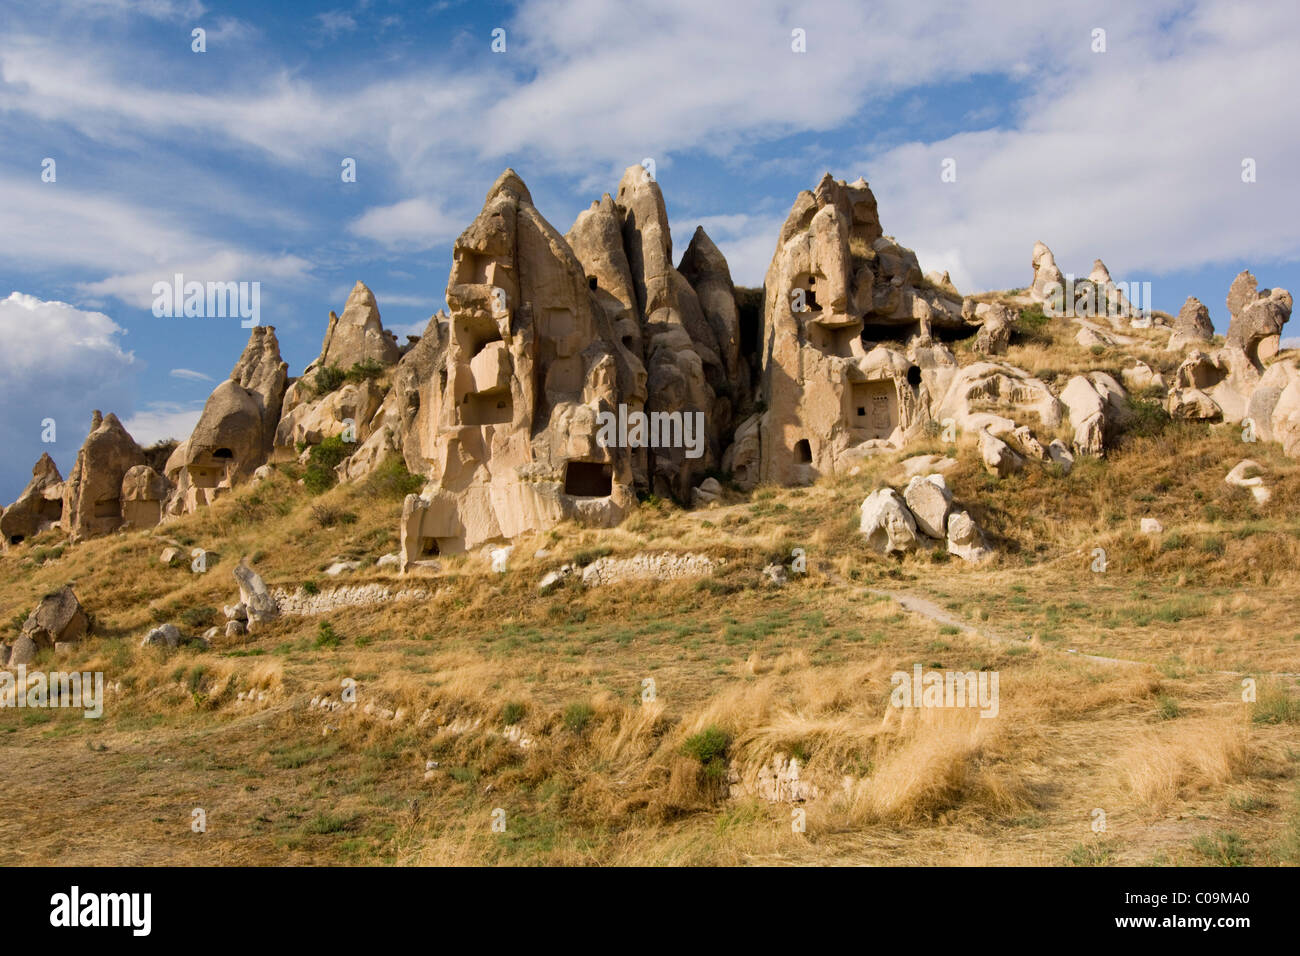 Tufa landscape with cave dwellings, UNESCO World Heritage Site, Goreme, Cappadocia, central Anatolia, Turkey, Asia Stock Photo